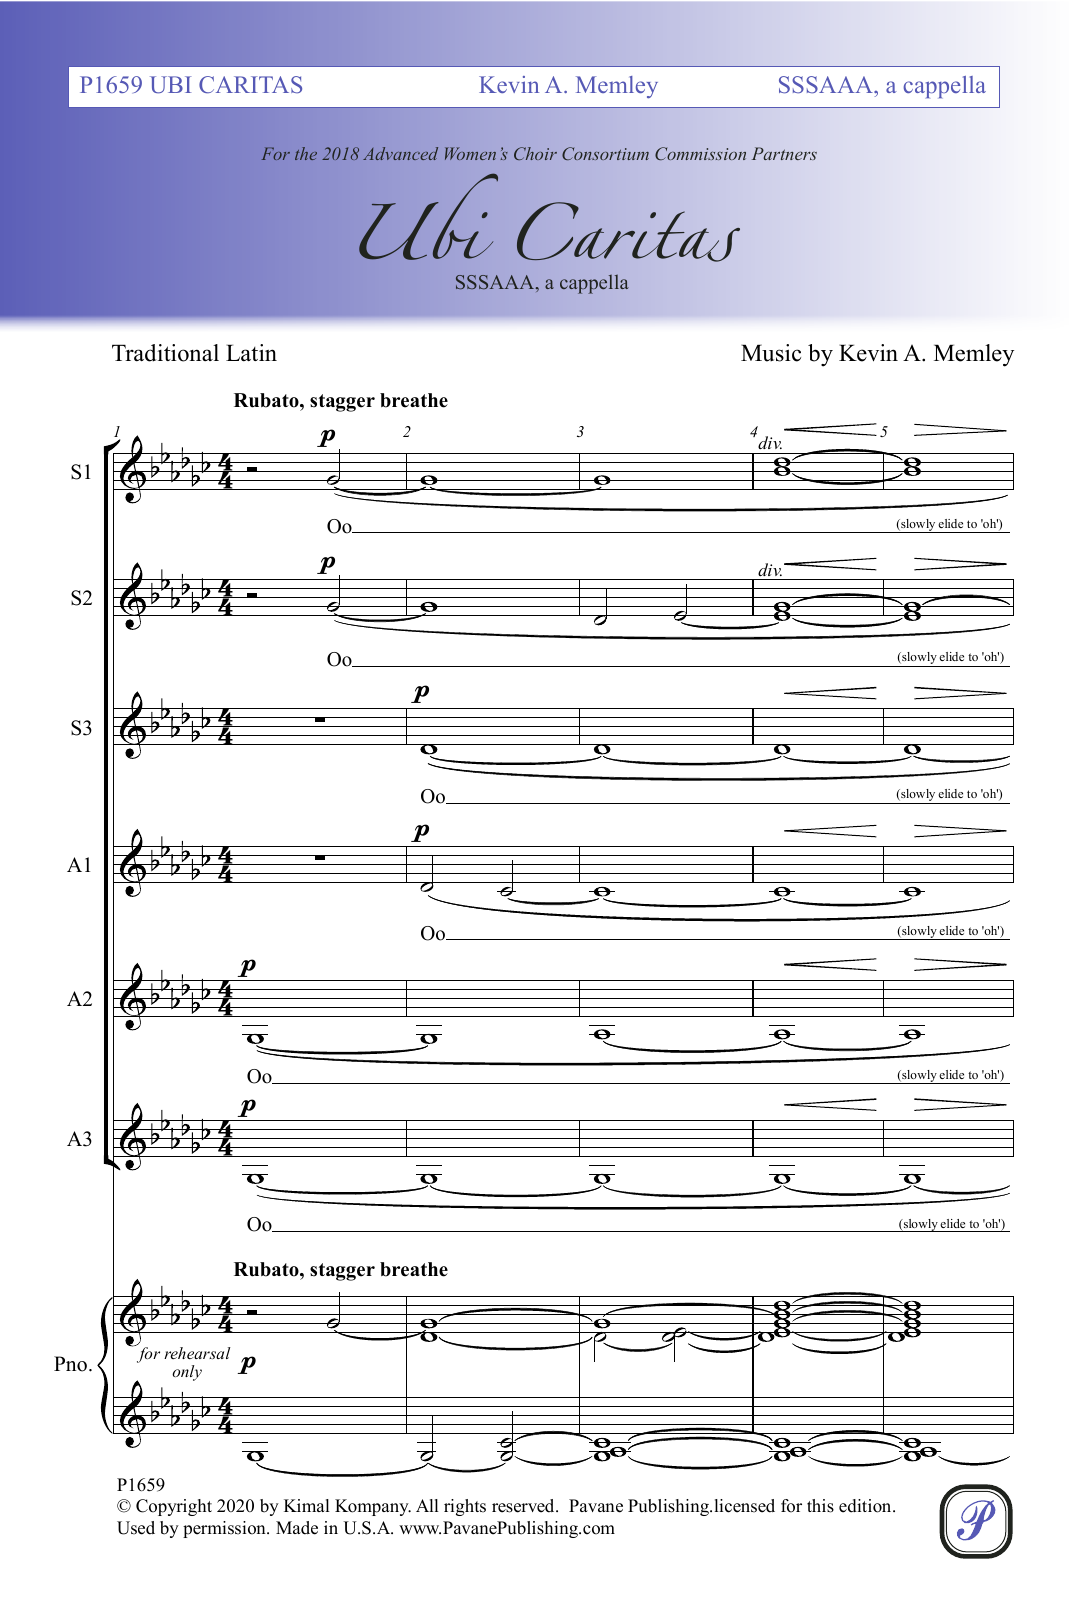 Kevin A. Memley Ubi Caritas Sheet Music Notes & Chords for SSA Choir - Download or Print PDF